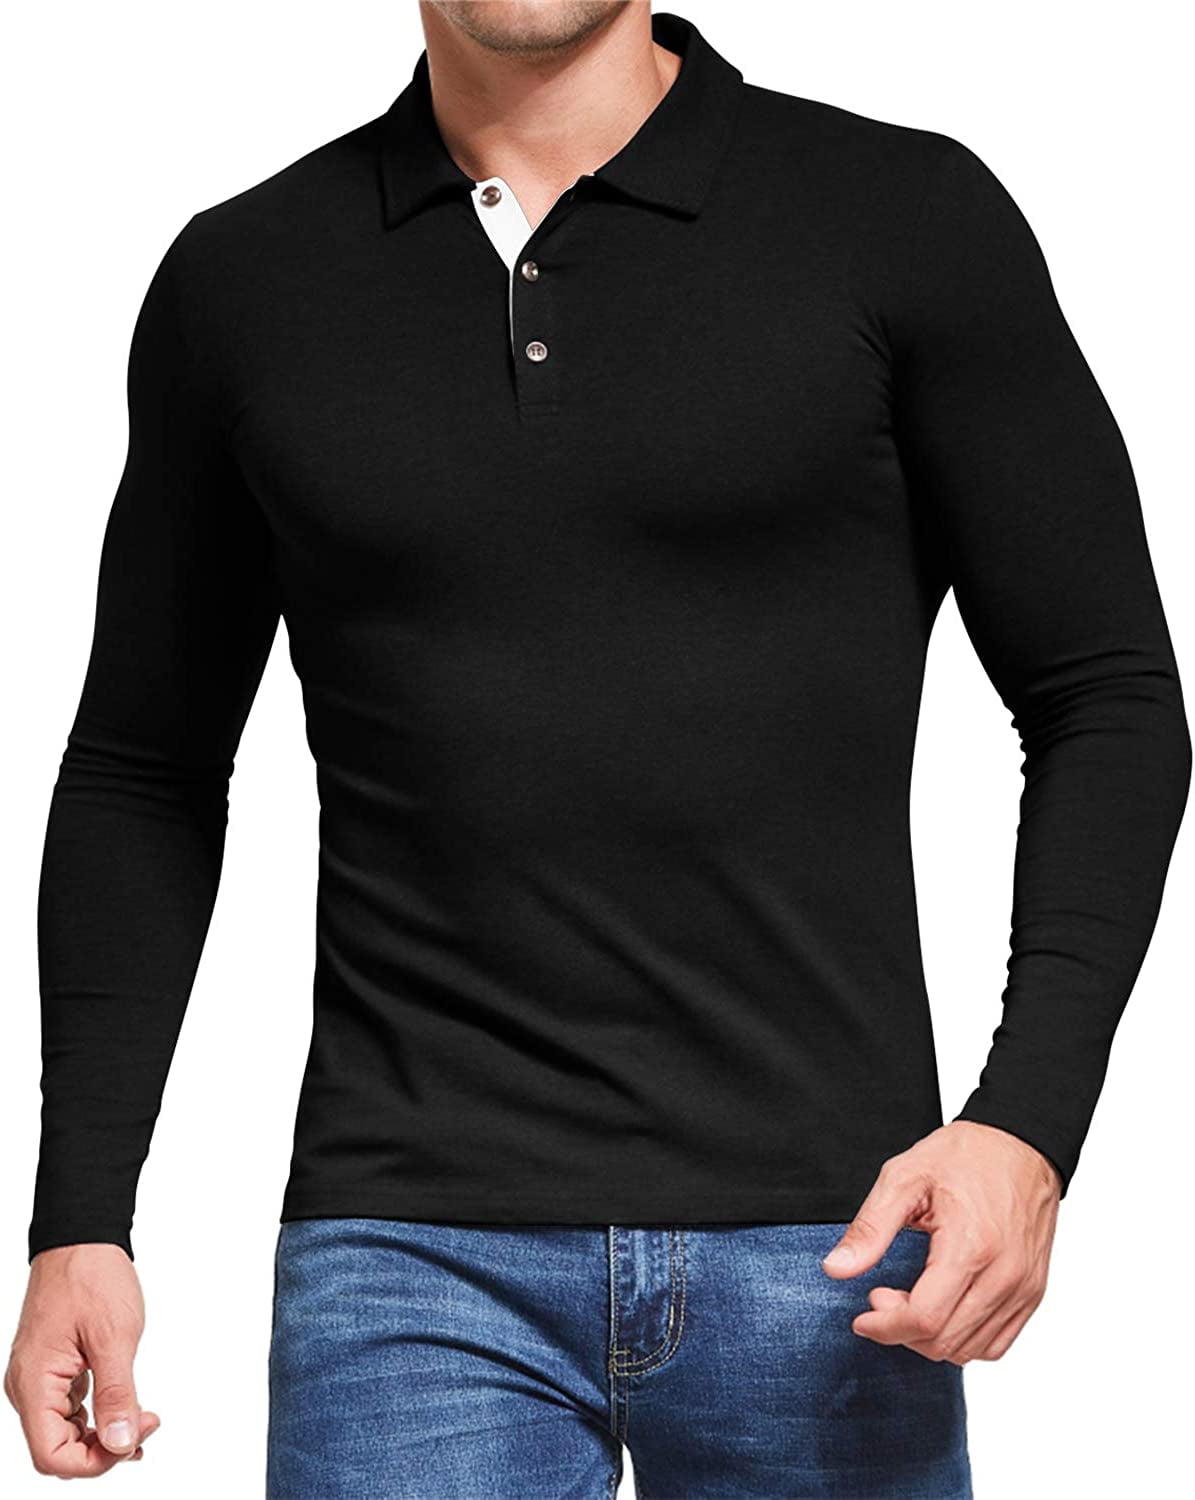 Aiyino Men's Long Sleeve Polo Shirts Casual Slim Fit Basic Designed ...